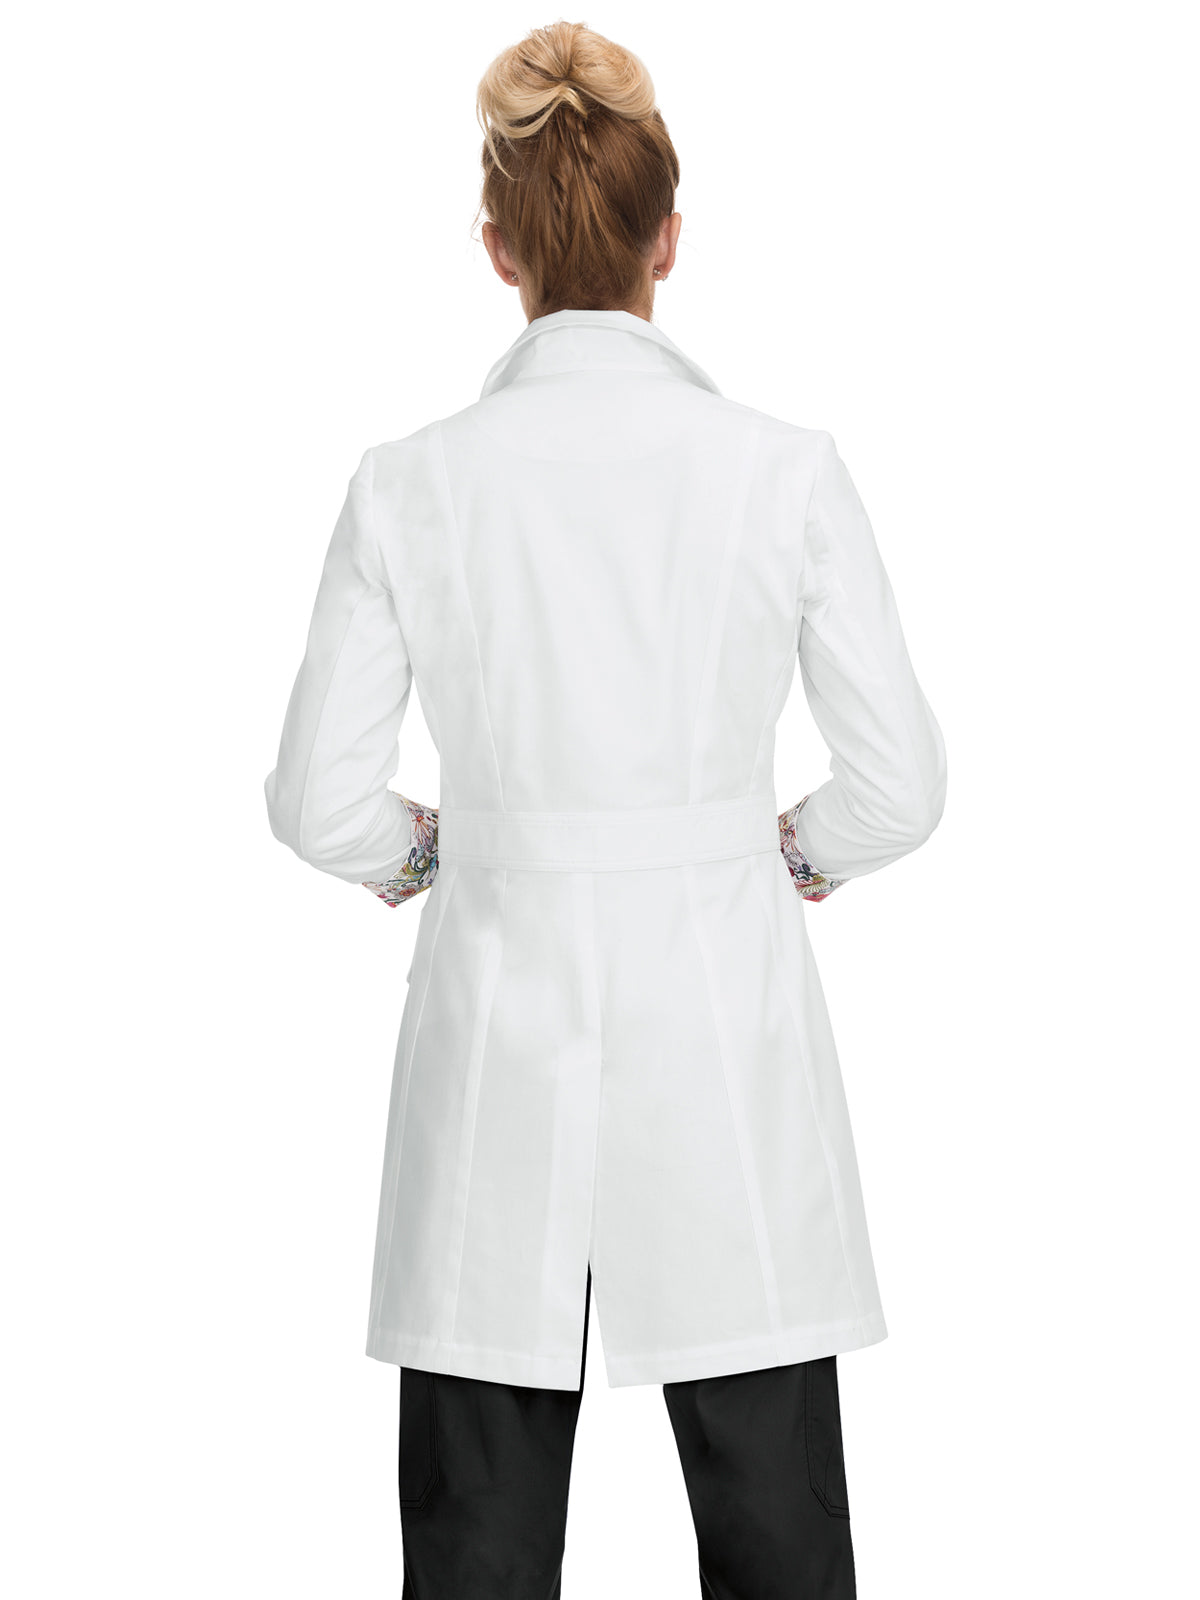 Women's Four-Pocket Geneva Lab Coat